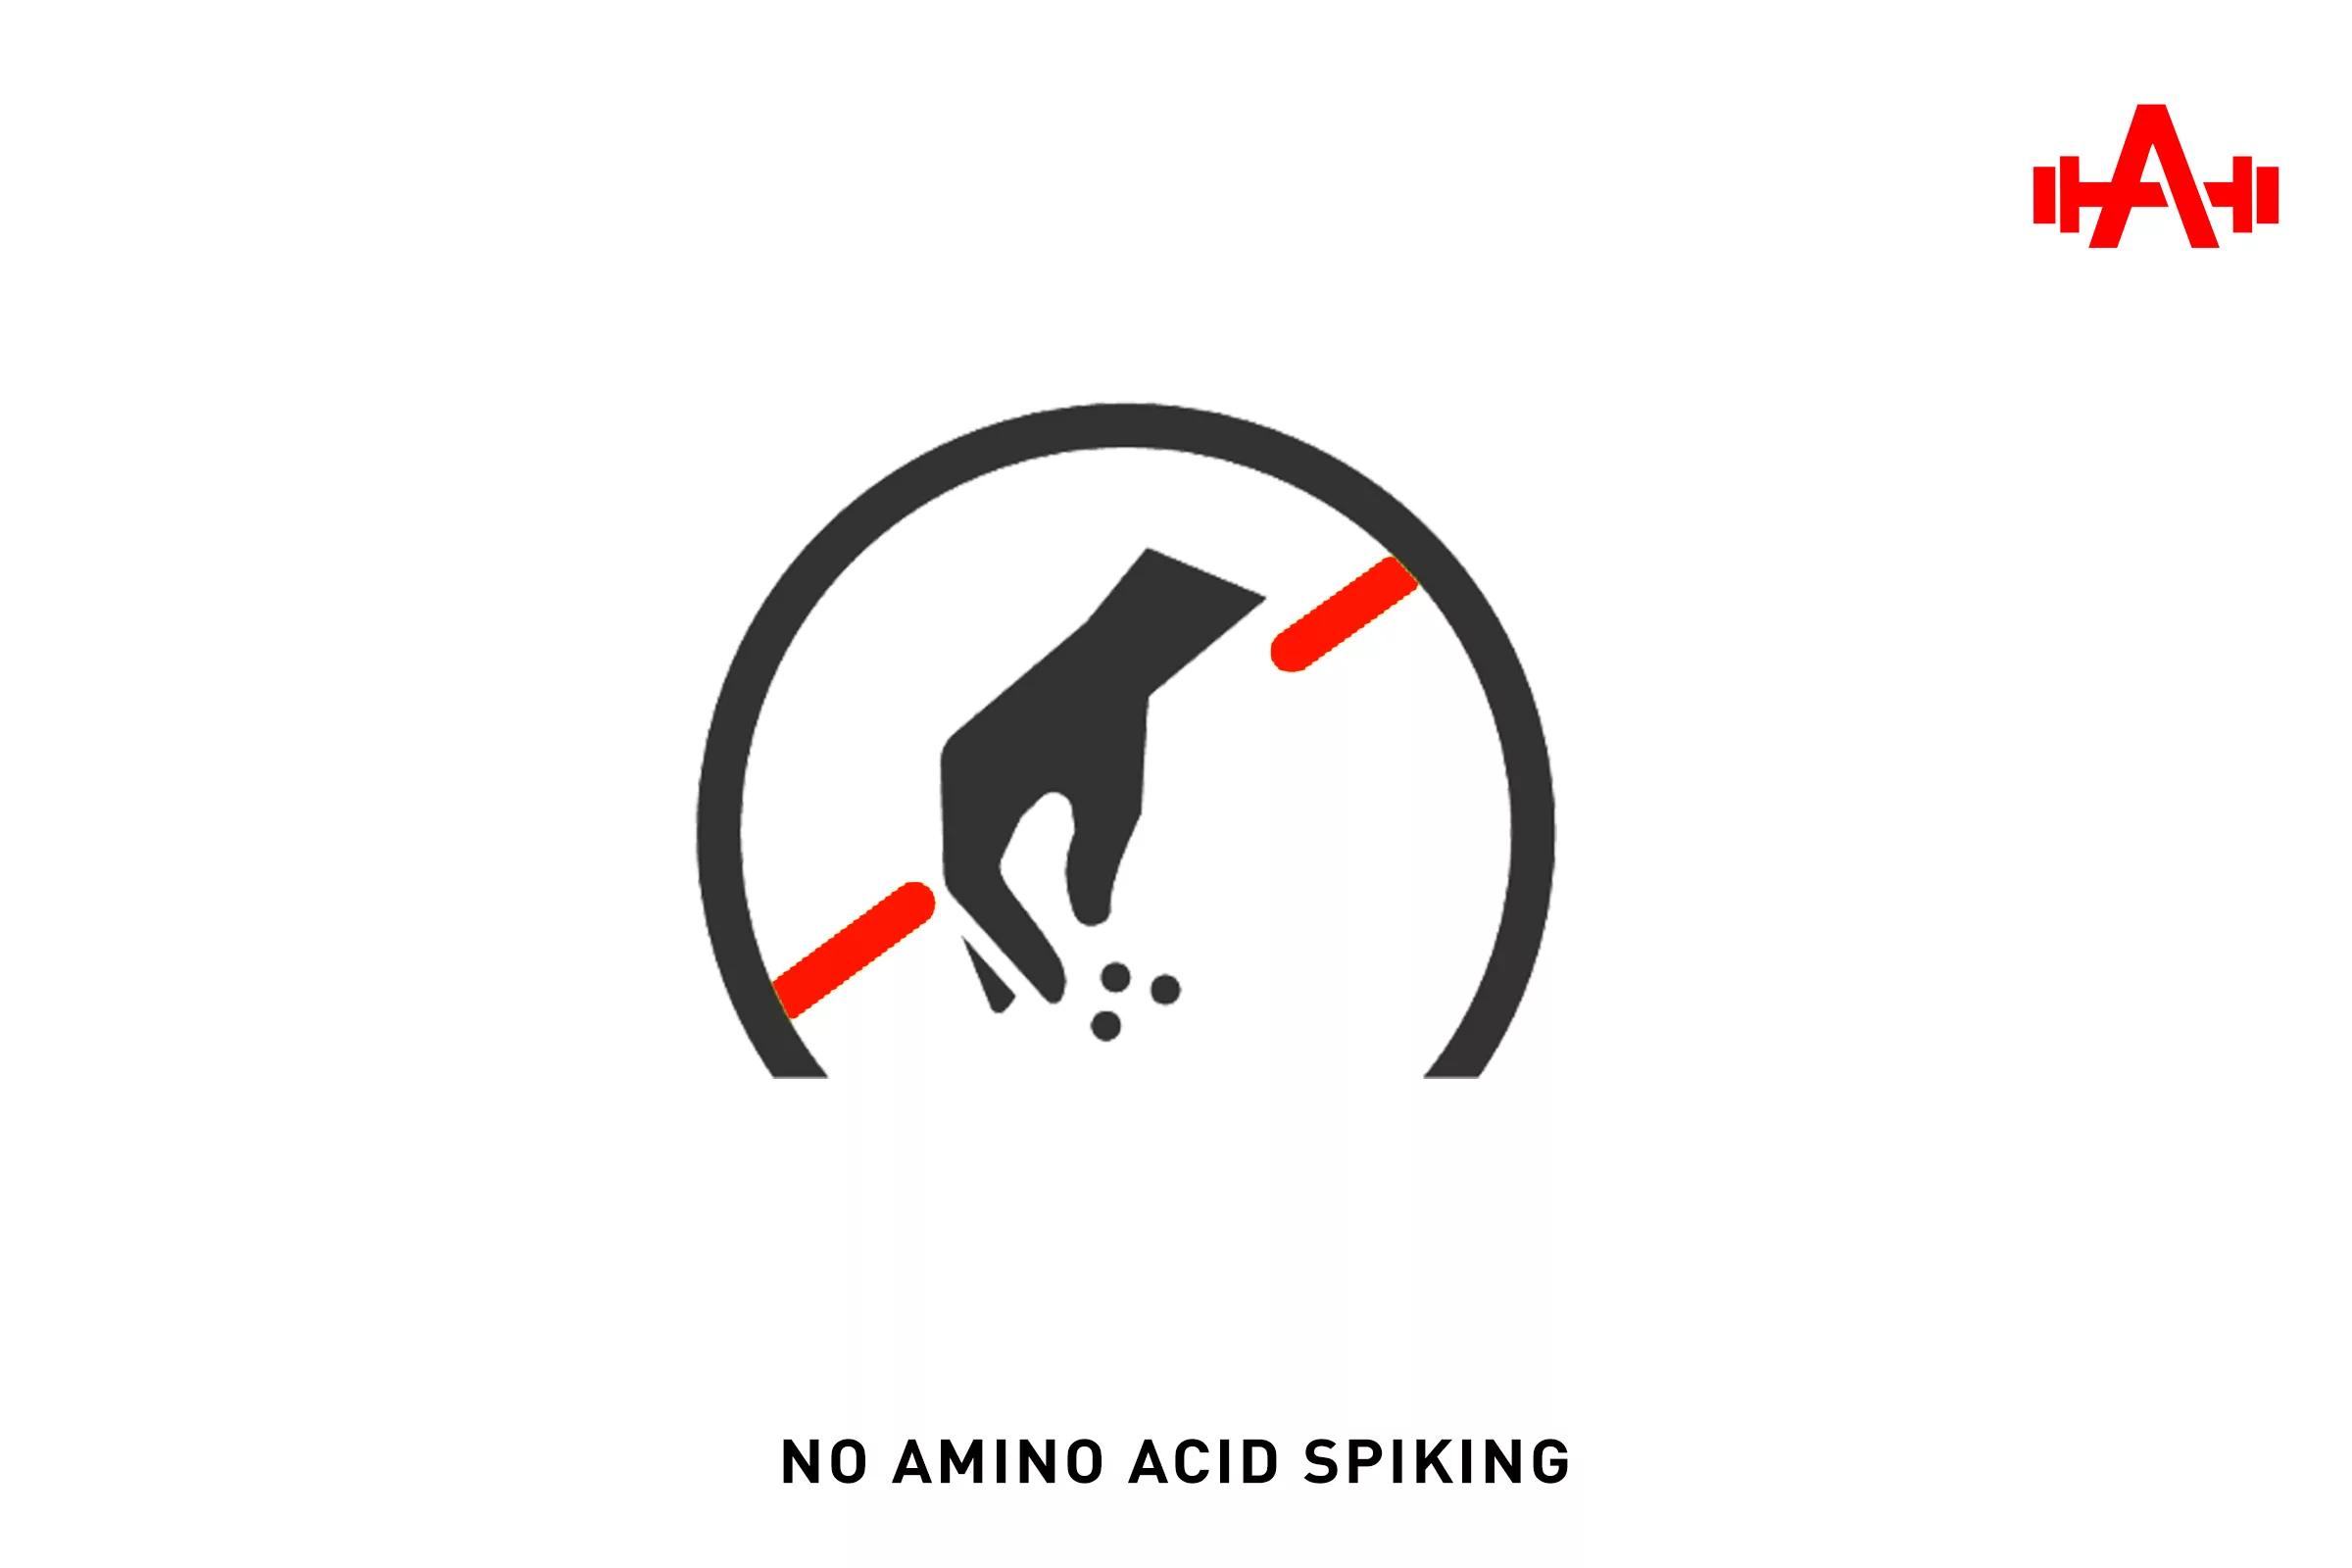 No Amino Acid Spiking